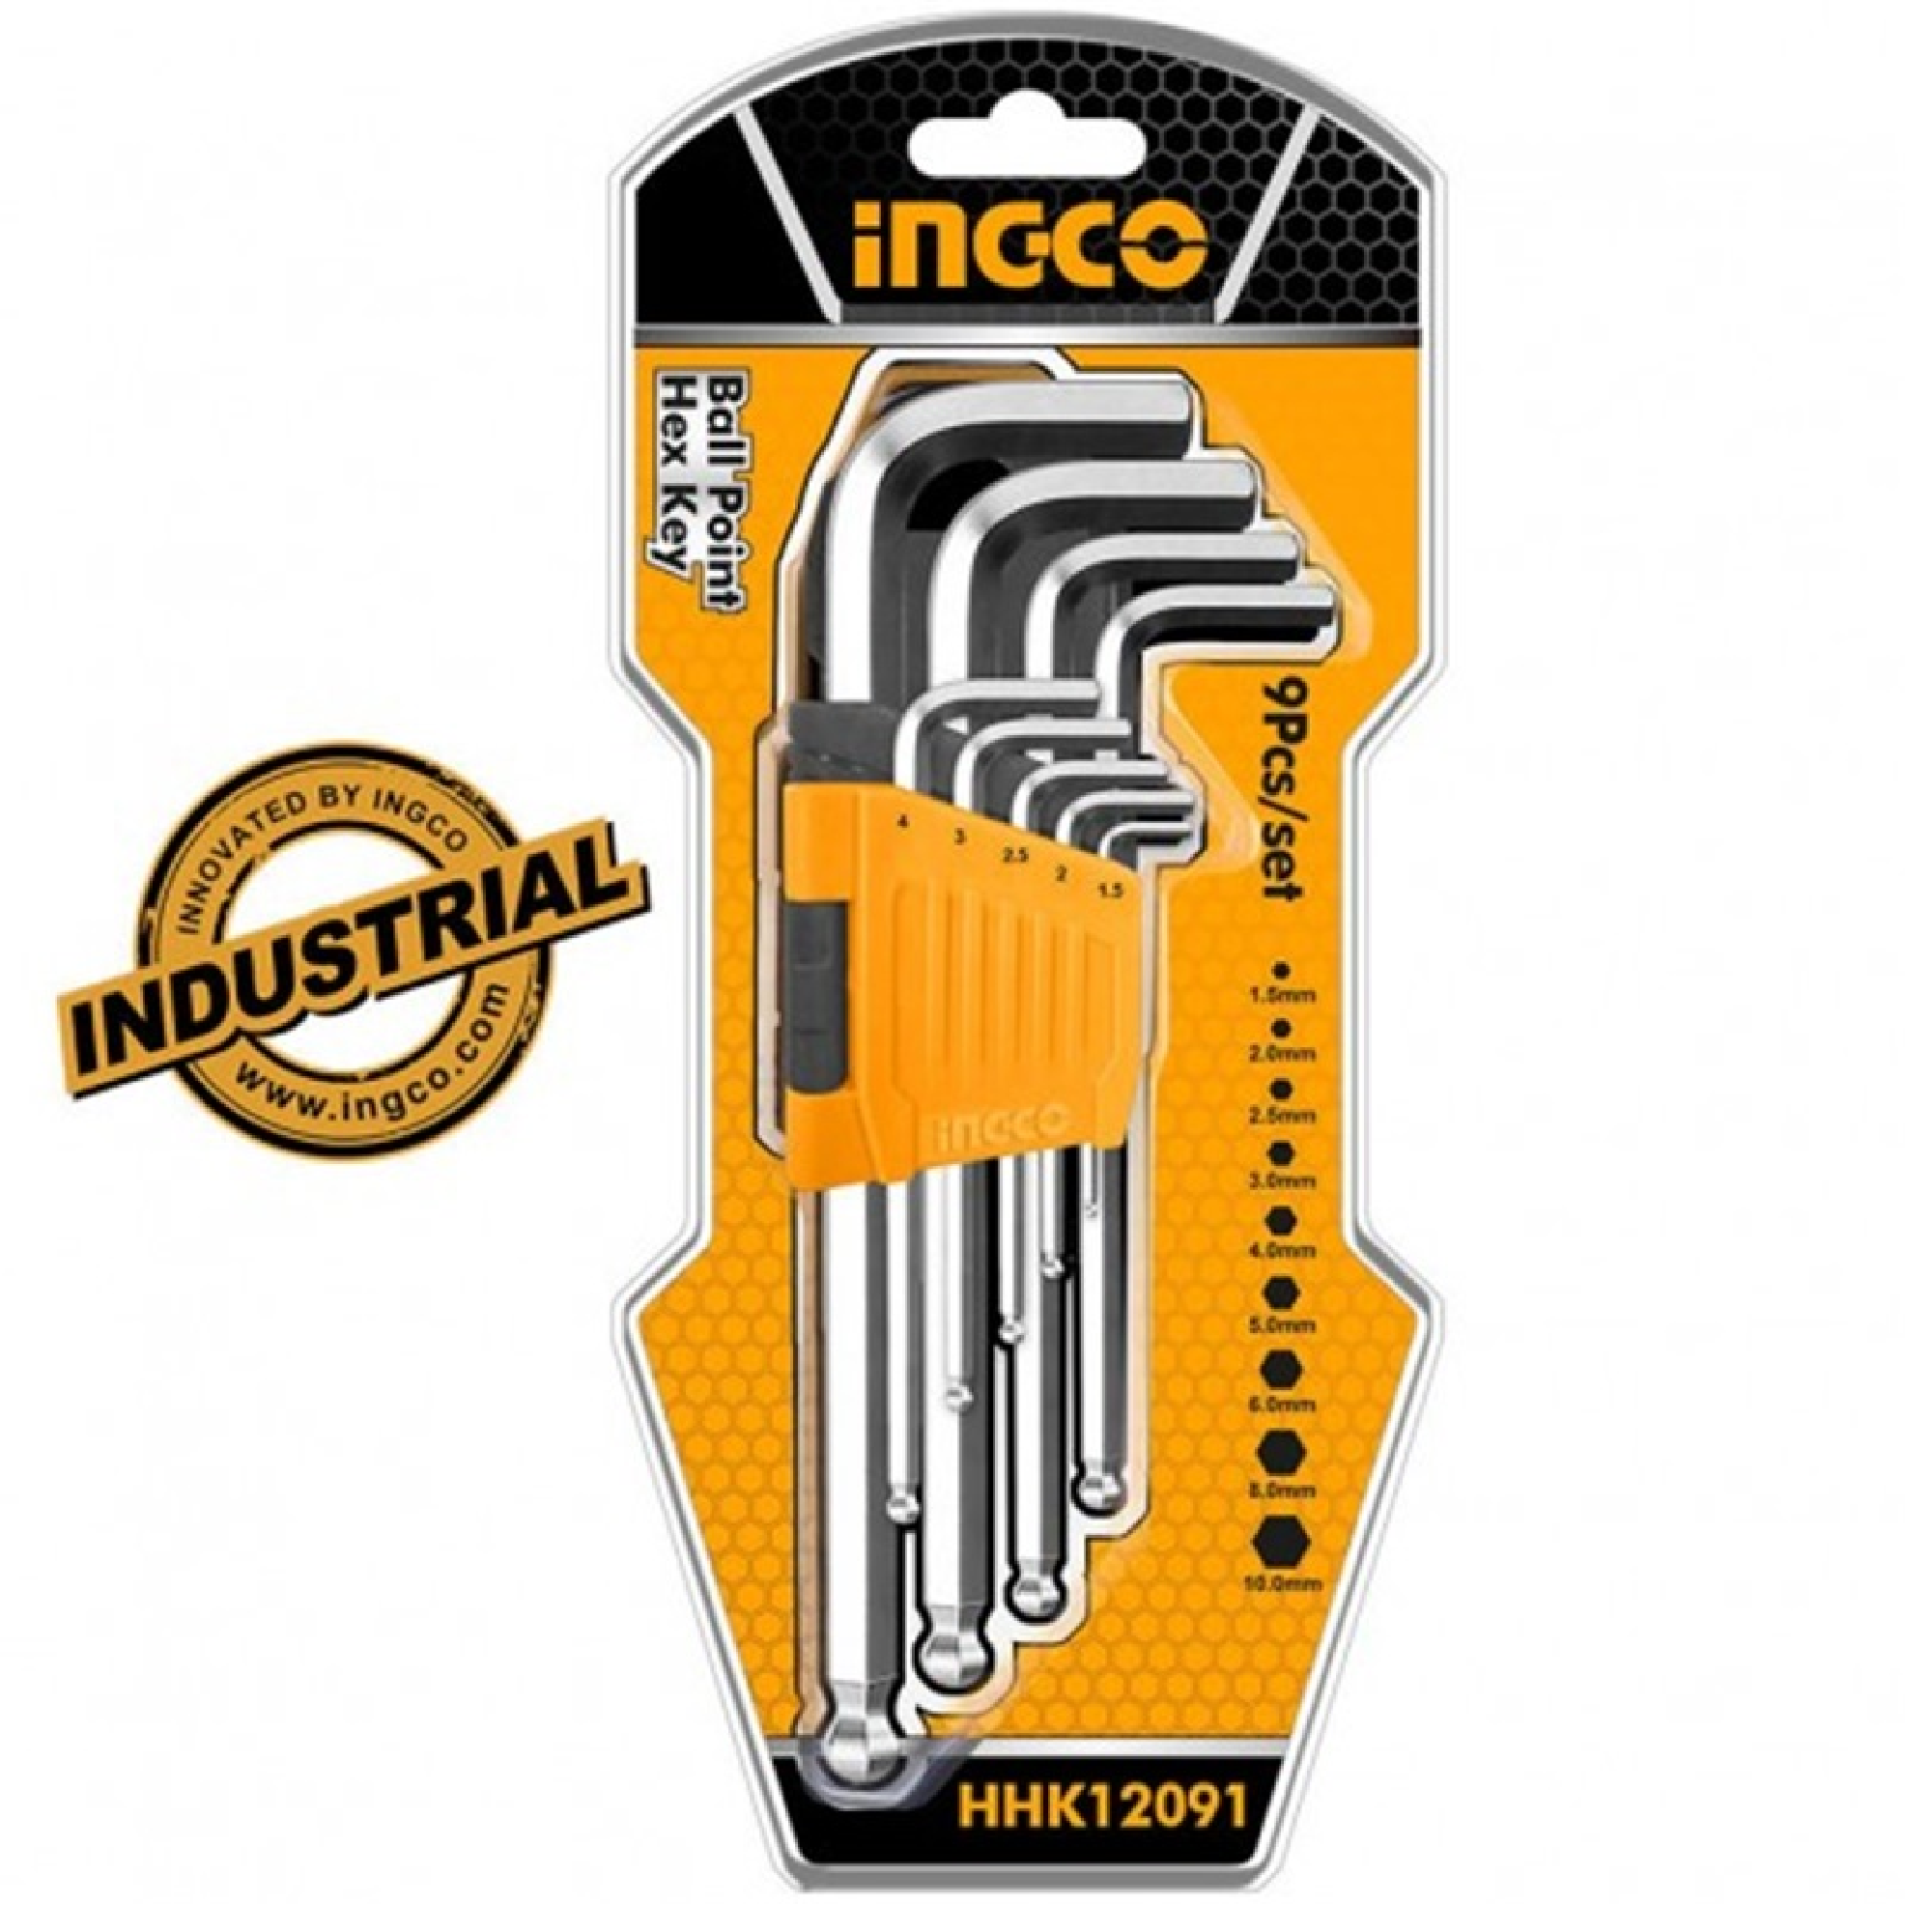 INGCO 9PC Long Arm BALL END HEX KEY Set 1.5MM - 10MM HHK12091